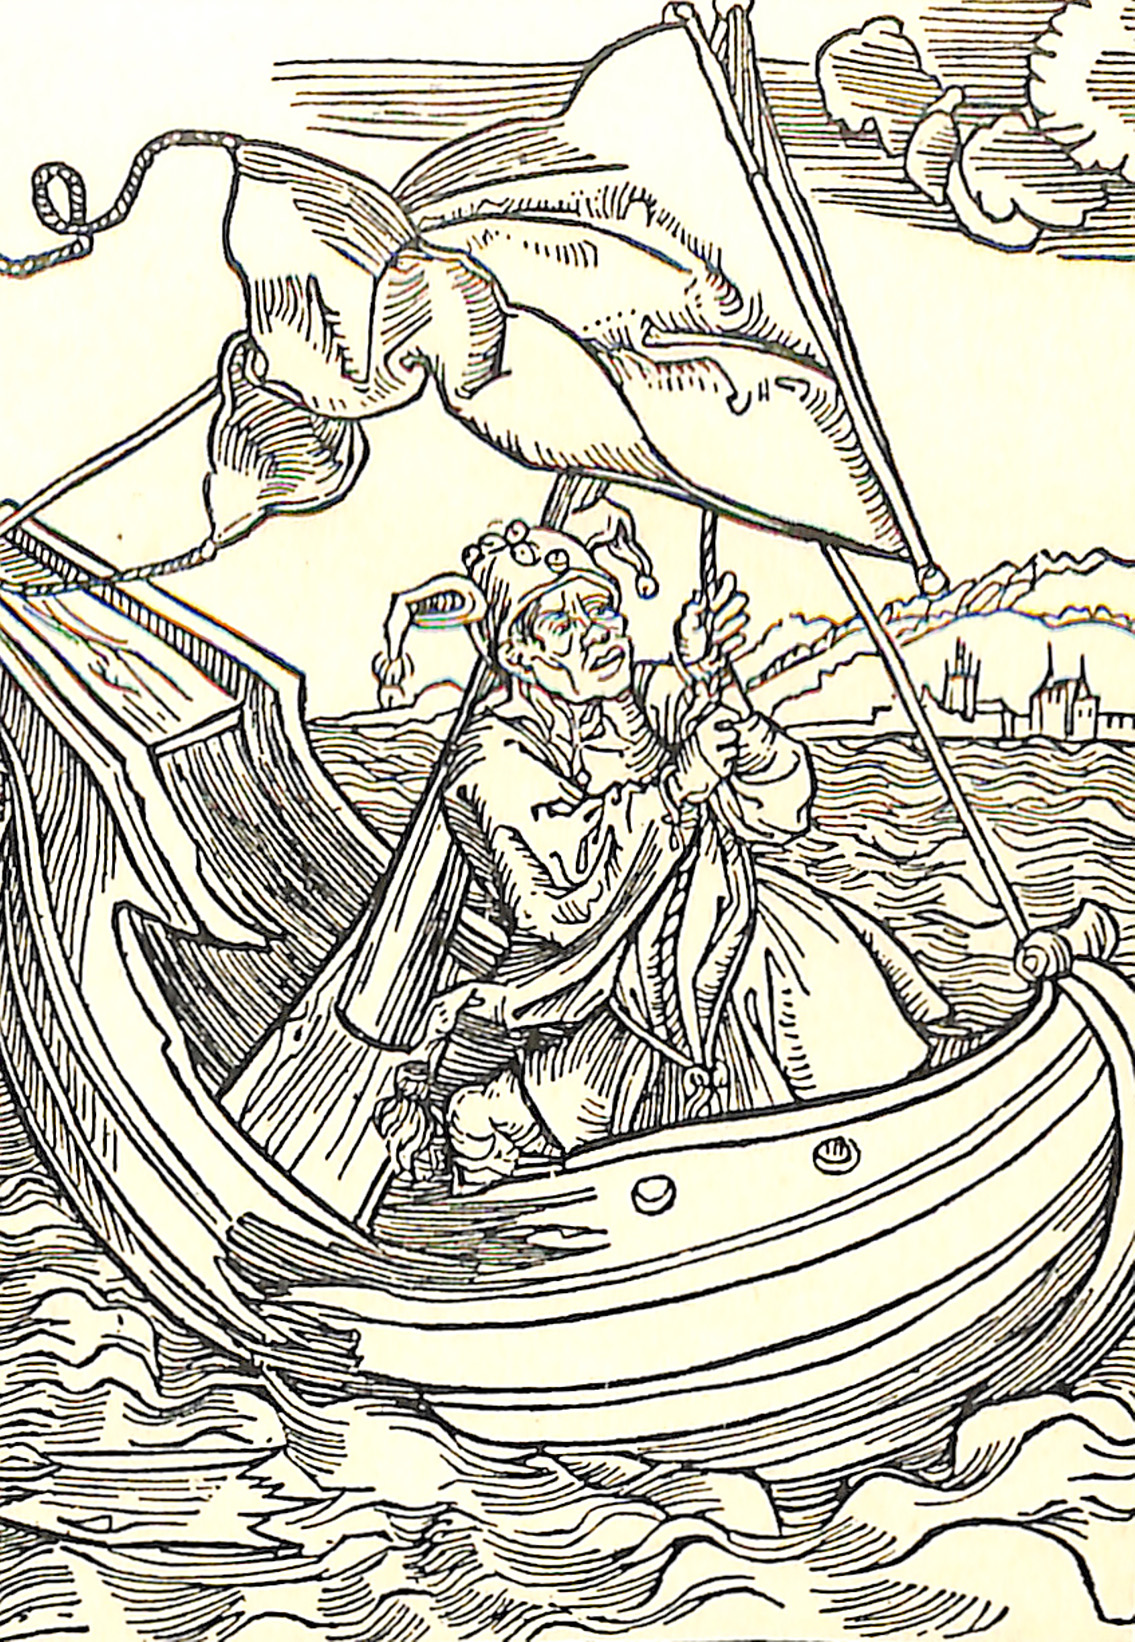 The Fool Puts to Sea In An Untrustworthy Ship